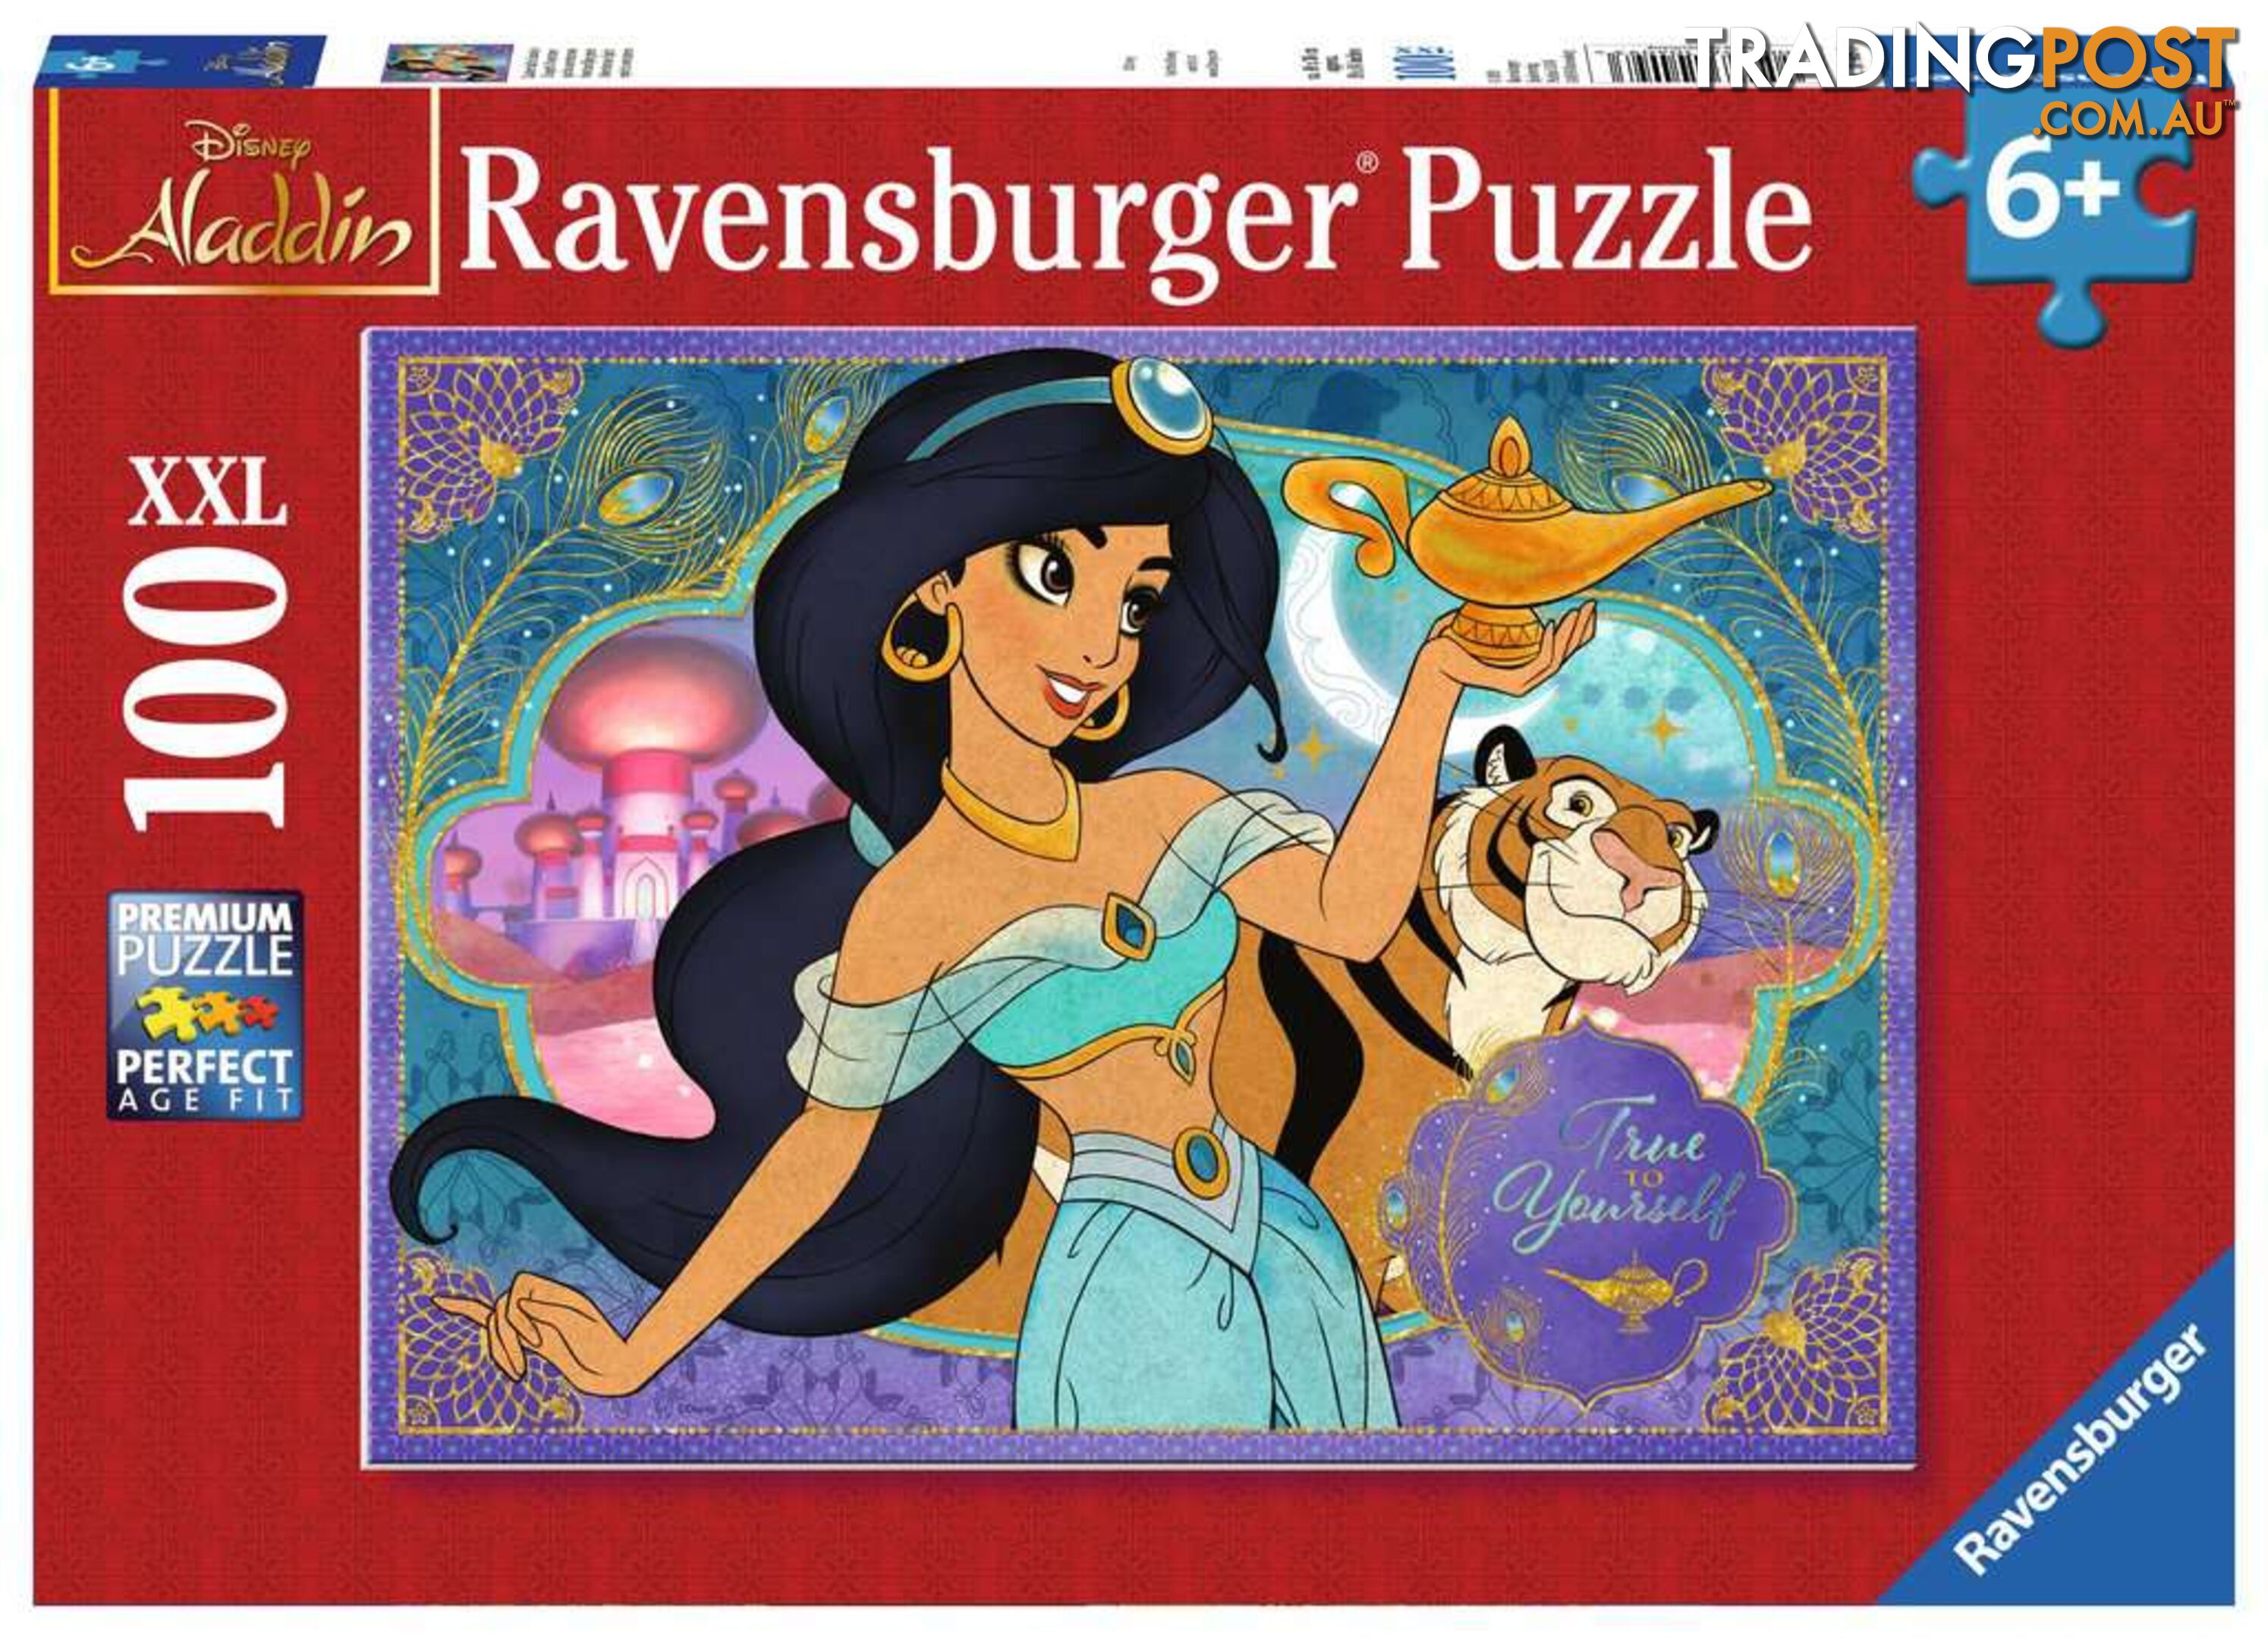 Ravensburger - Disney Aladdin Princess Jasmine Jigsaw Puzzle 100 Piece Rb10409 - 4005556104093